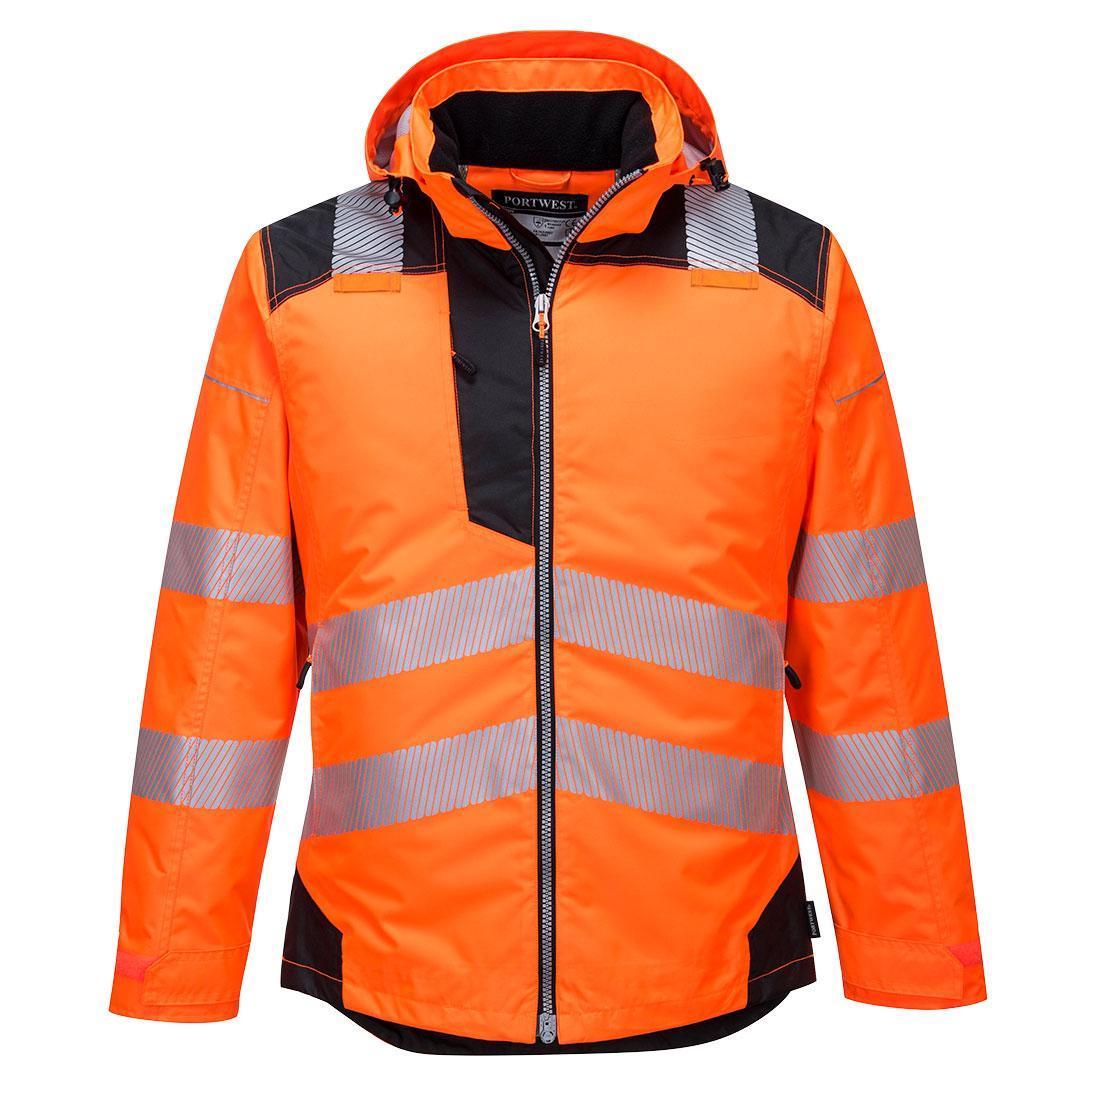 Portwest Mens PW3 Hi-Vis Winter Jacket (Orange/Black) (3XL)